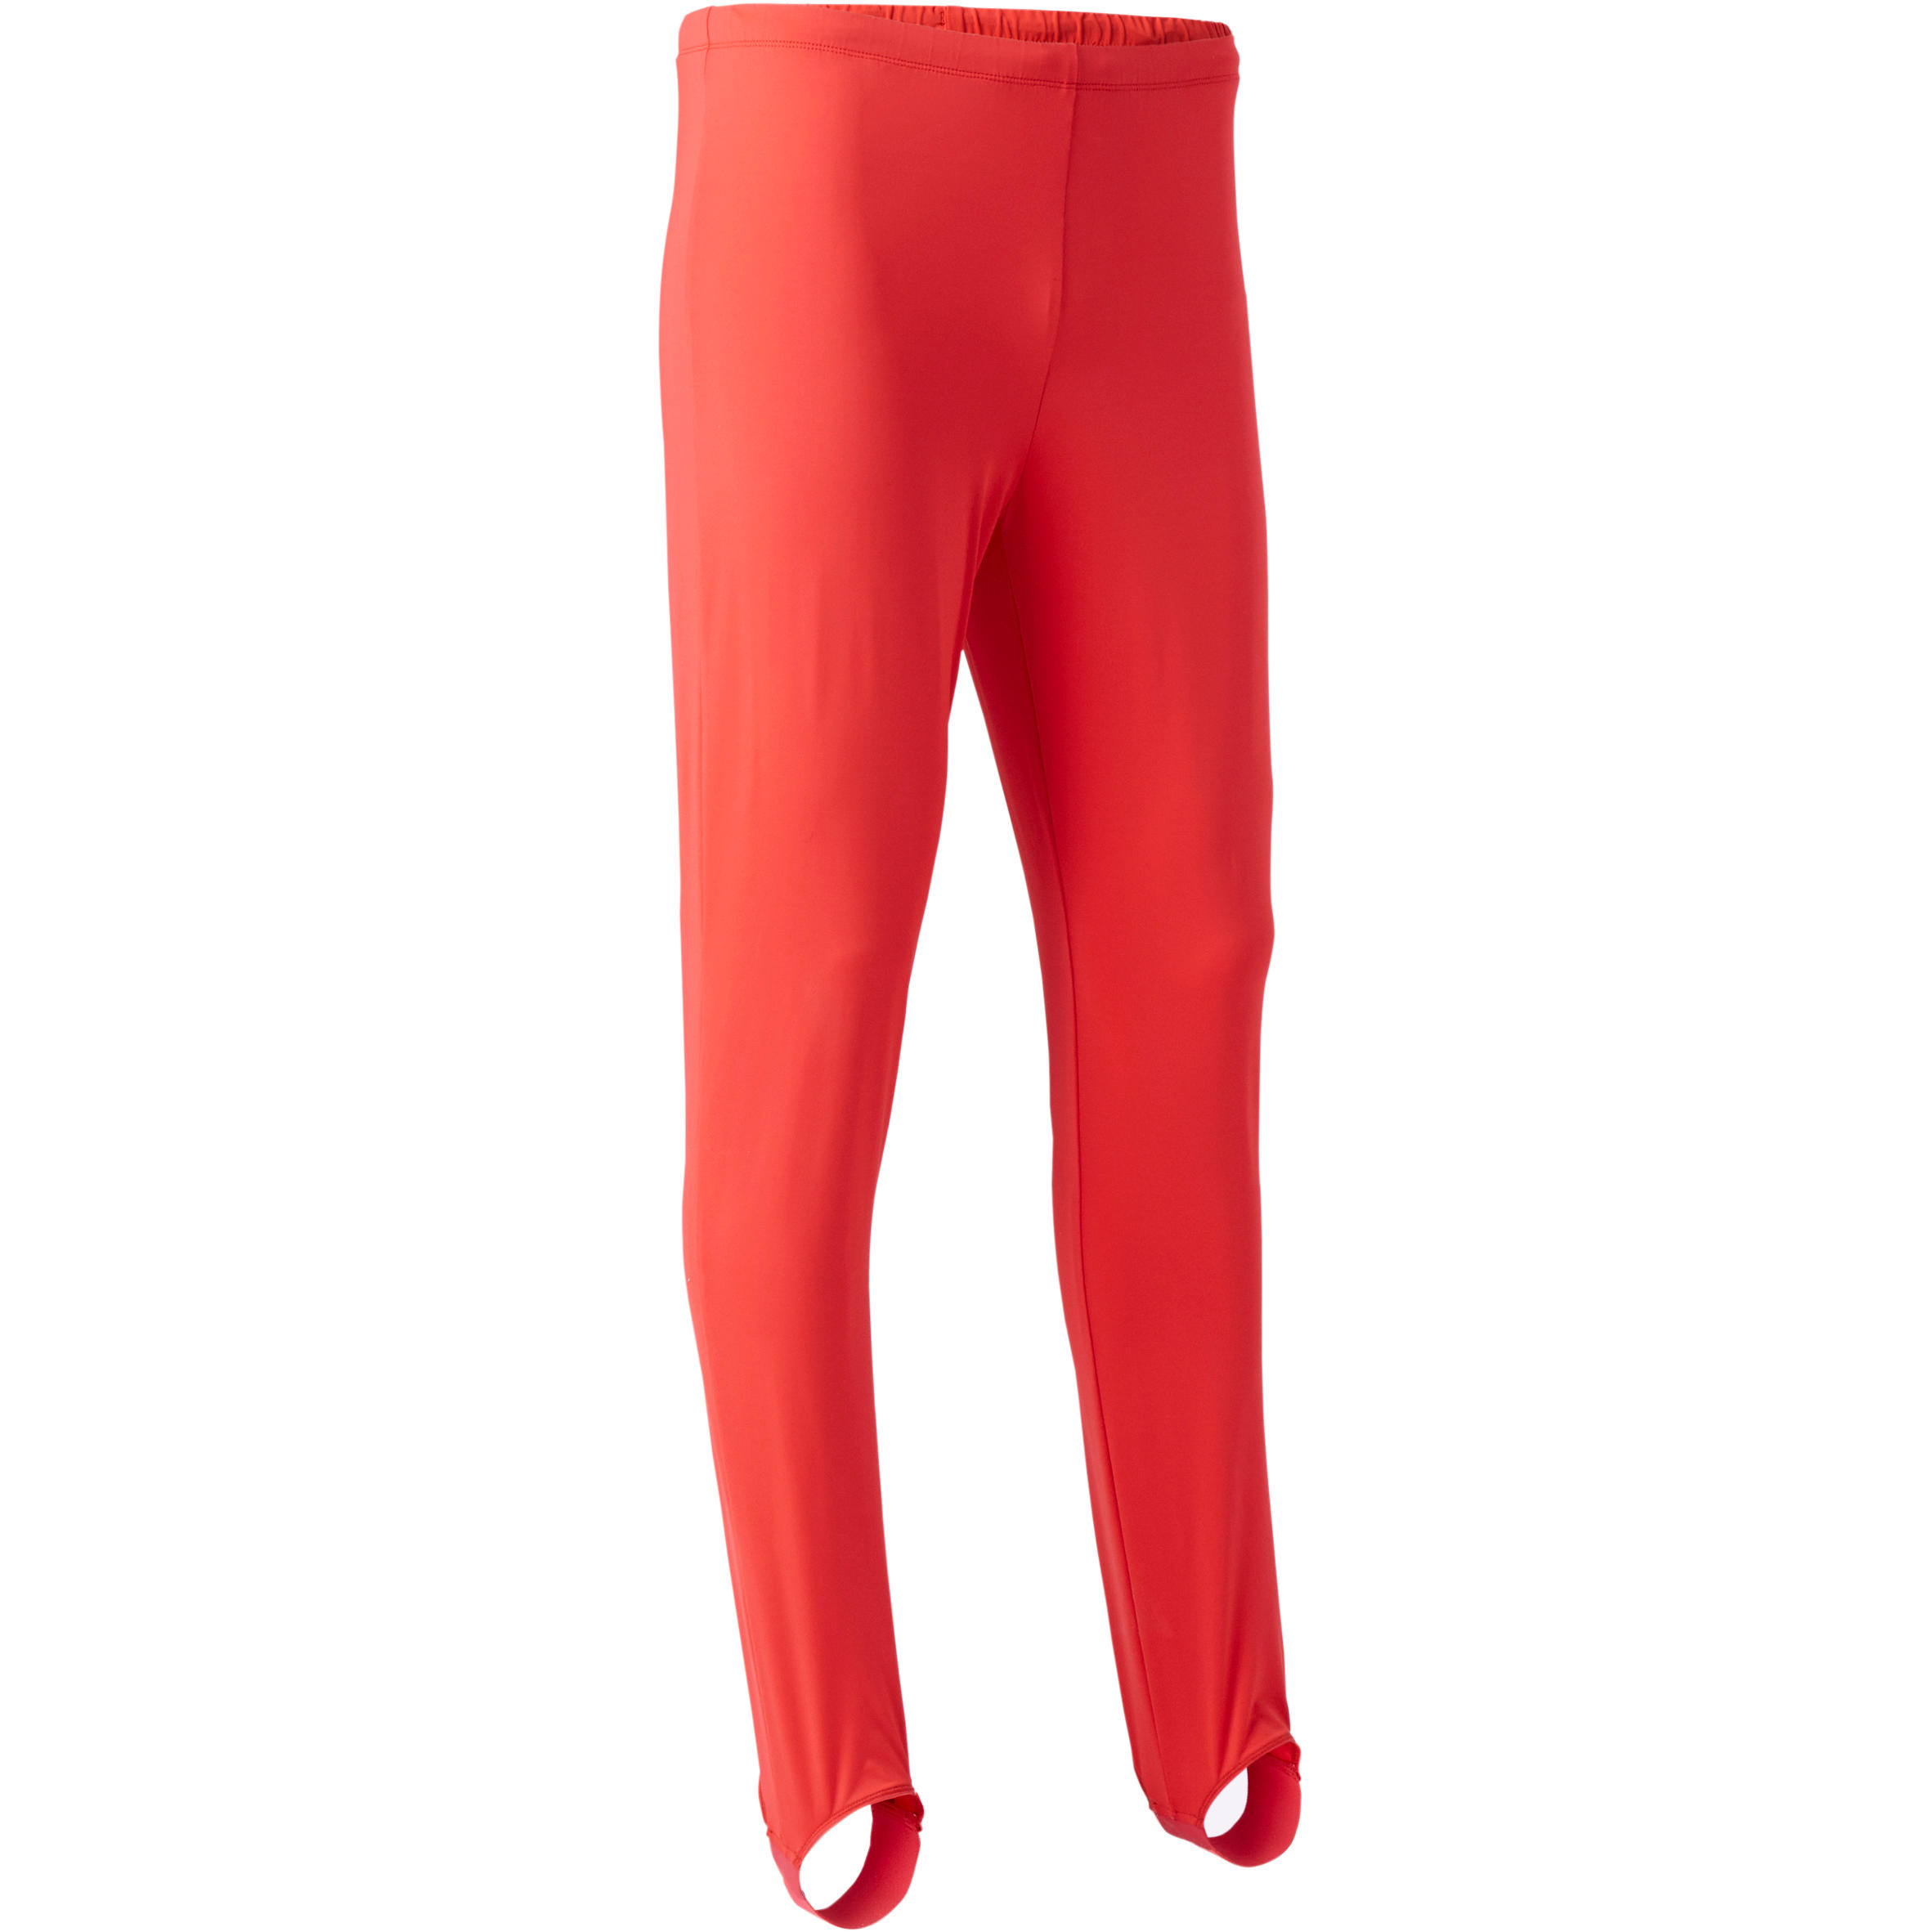 Boys' Gymnastics Stirrup Pants - Red 1/5